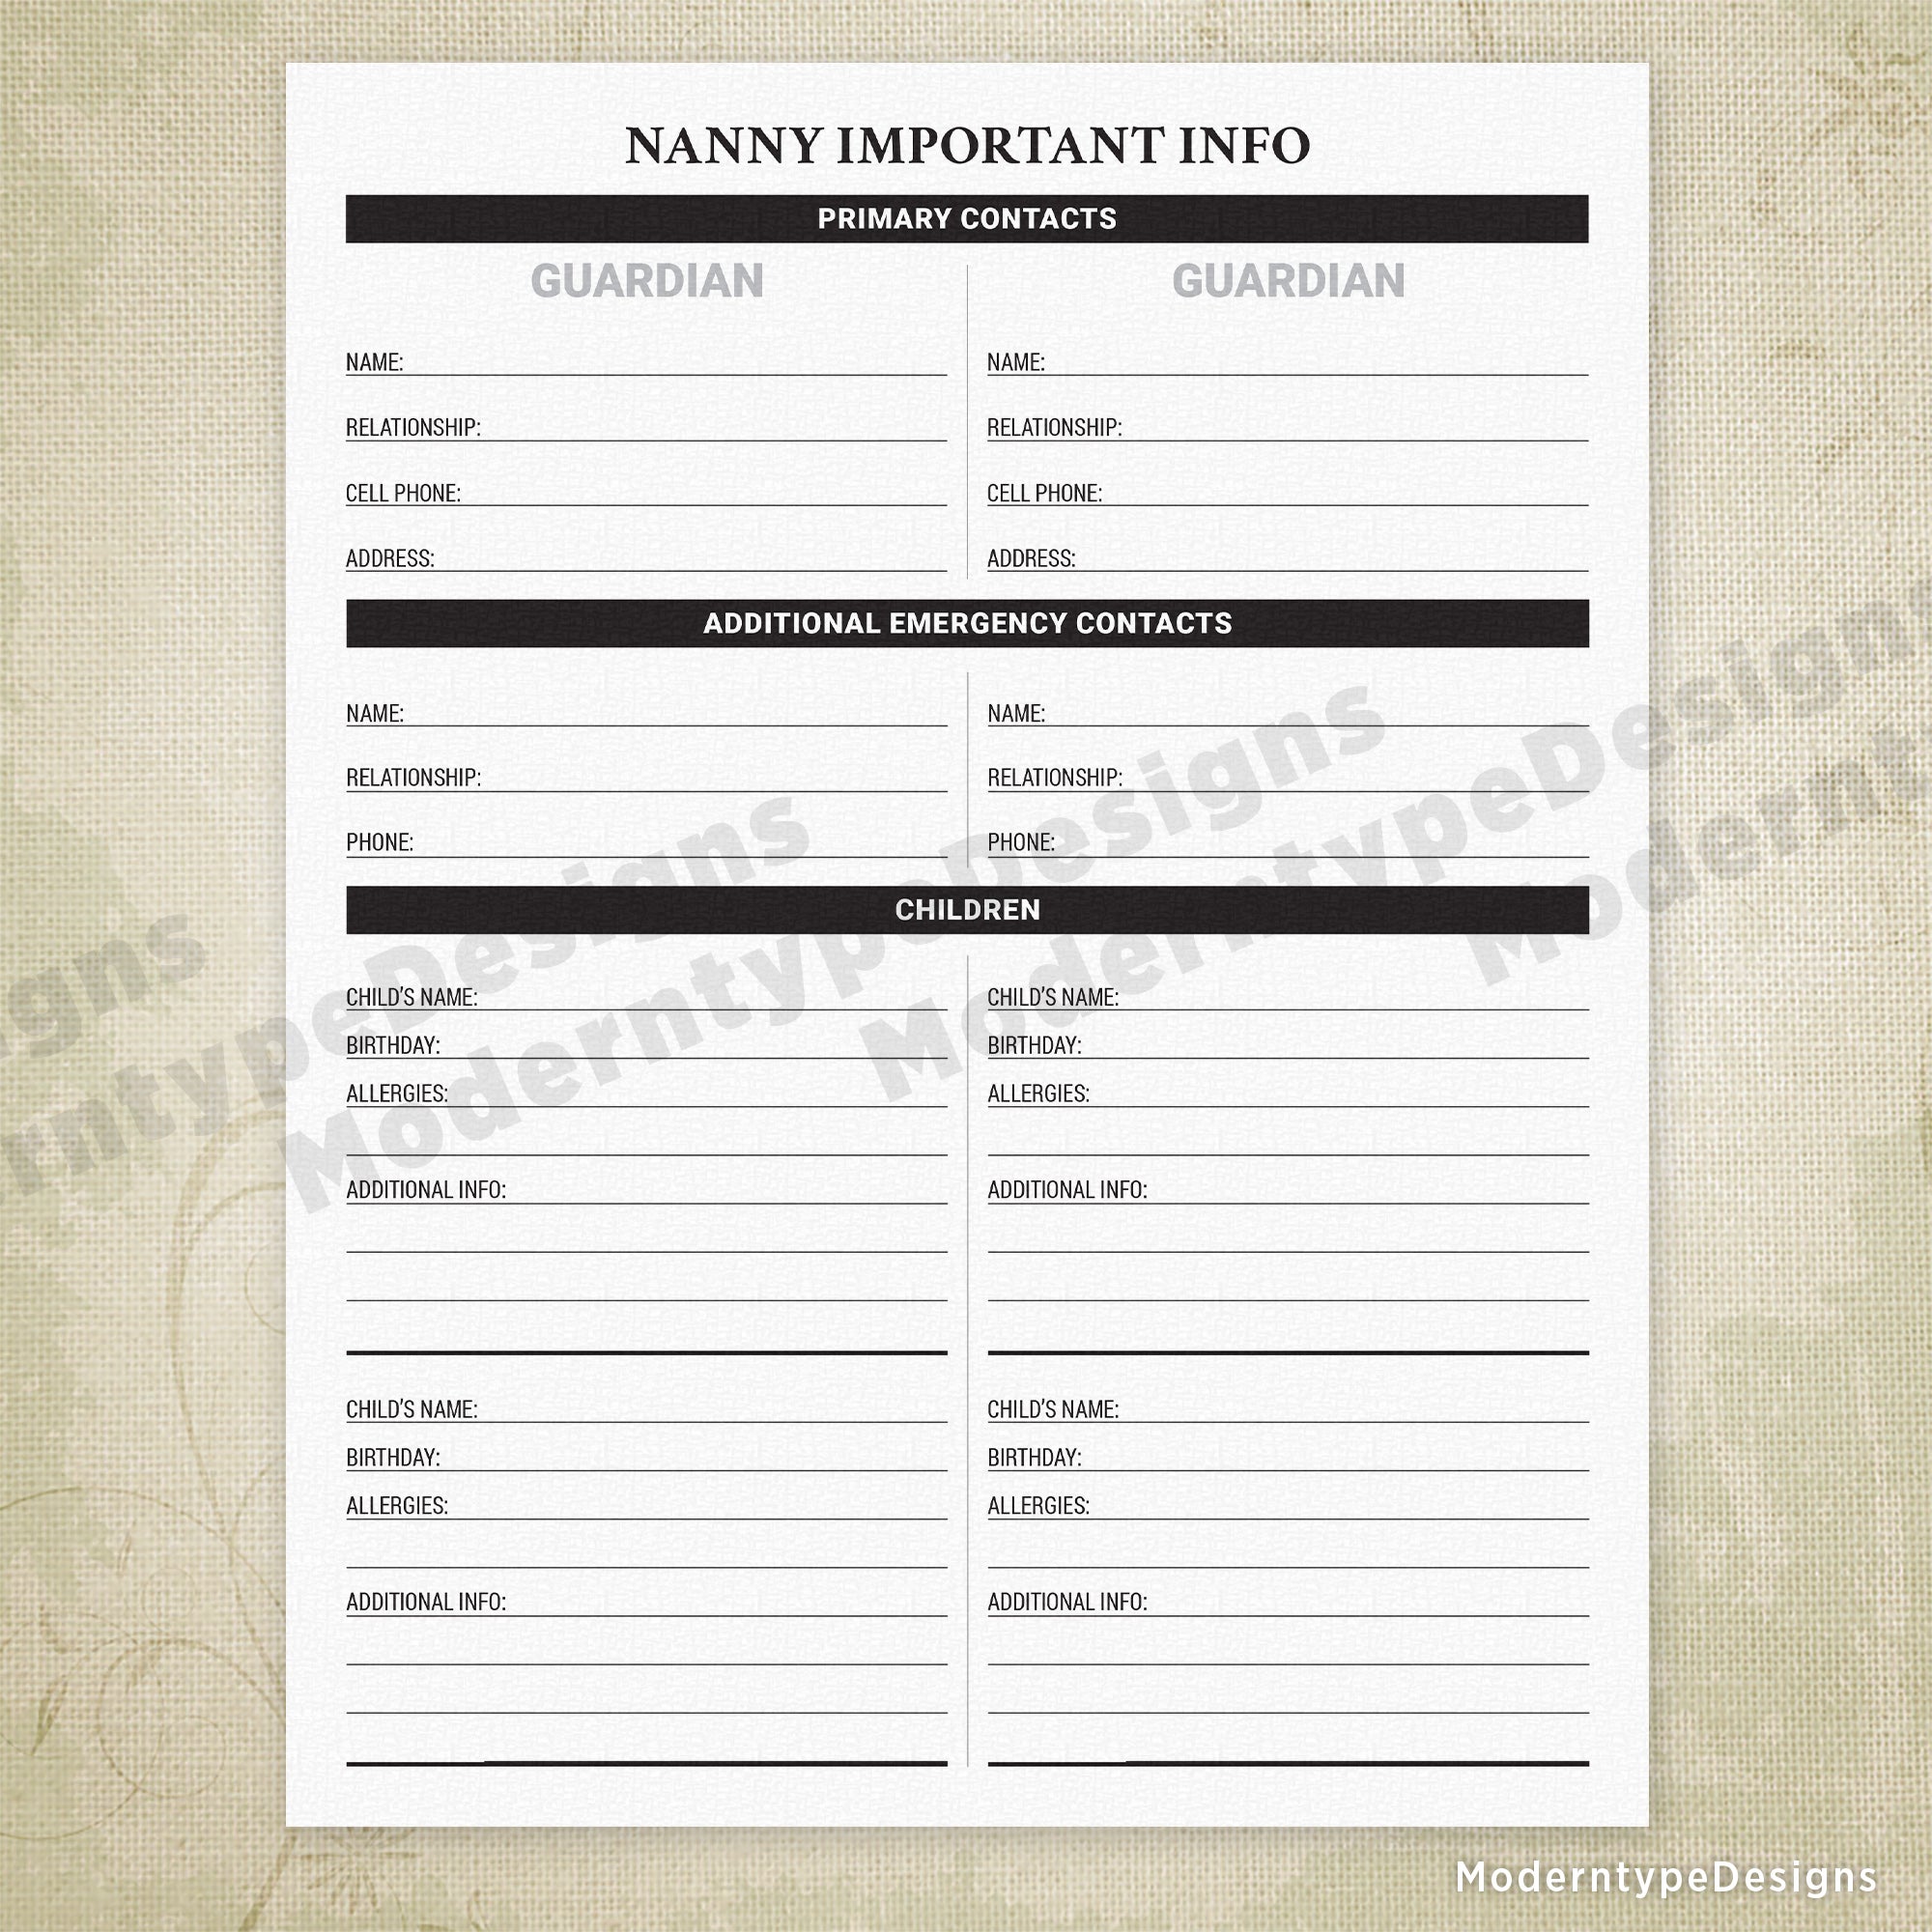 Nanny Important Info Printable